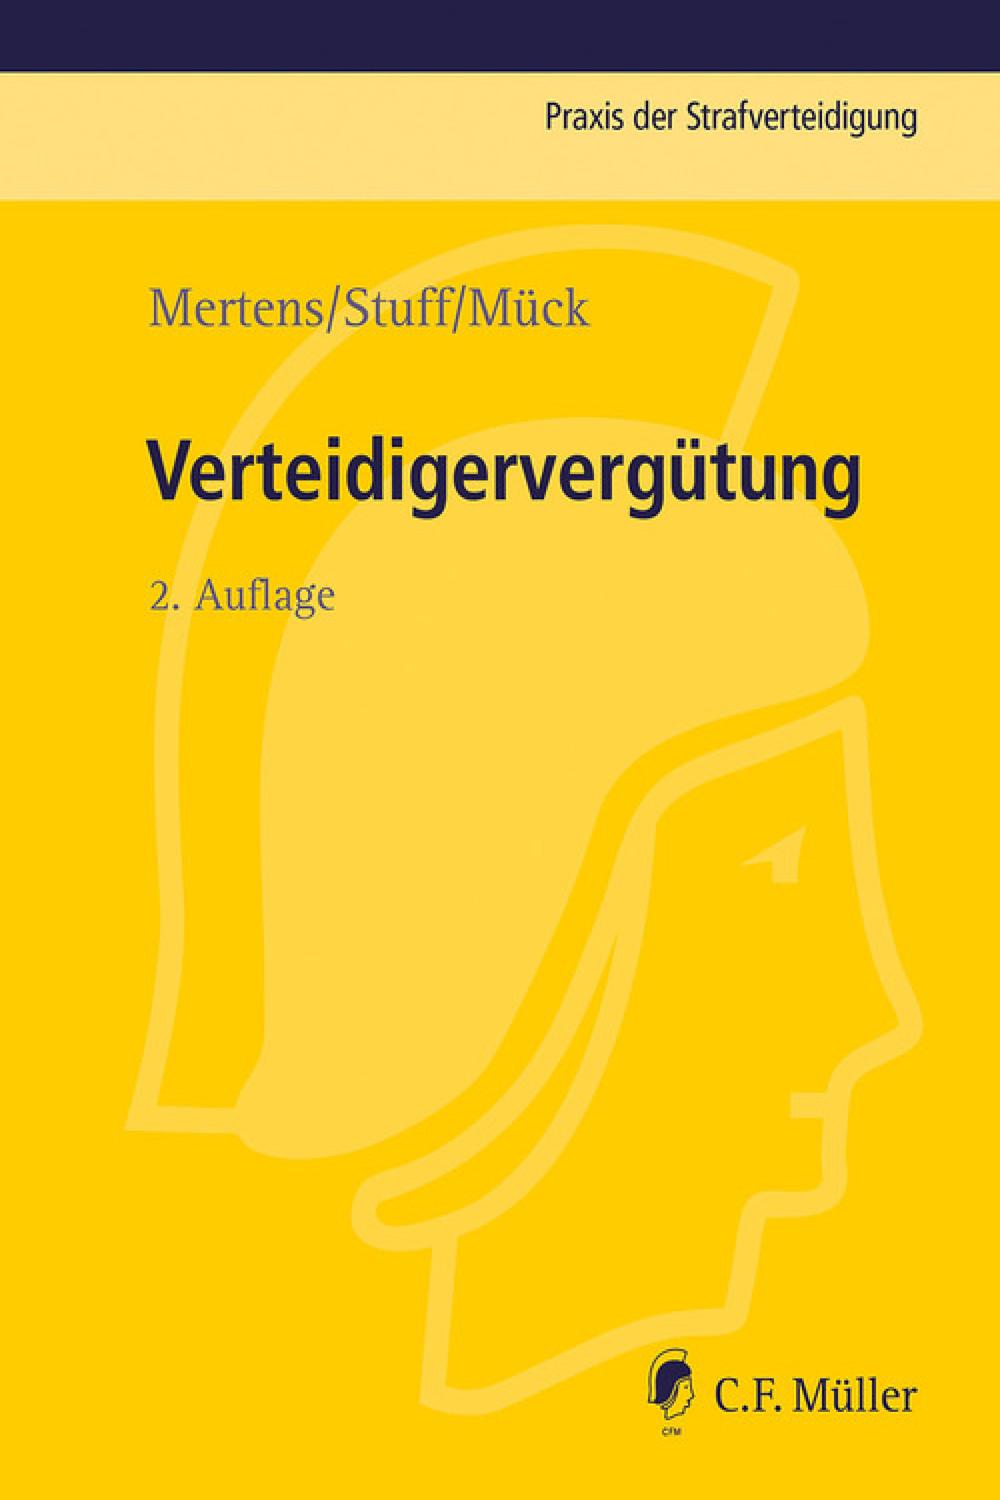 Verteidigervergütung - Andreas Mertens, Iris Stuff